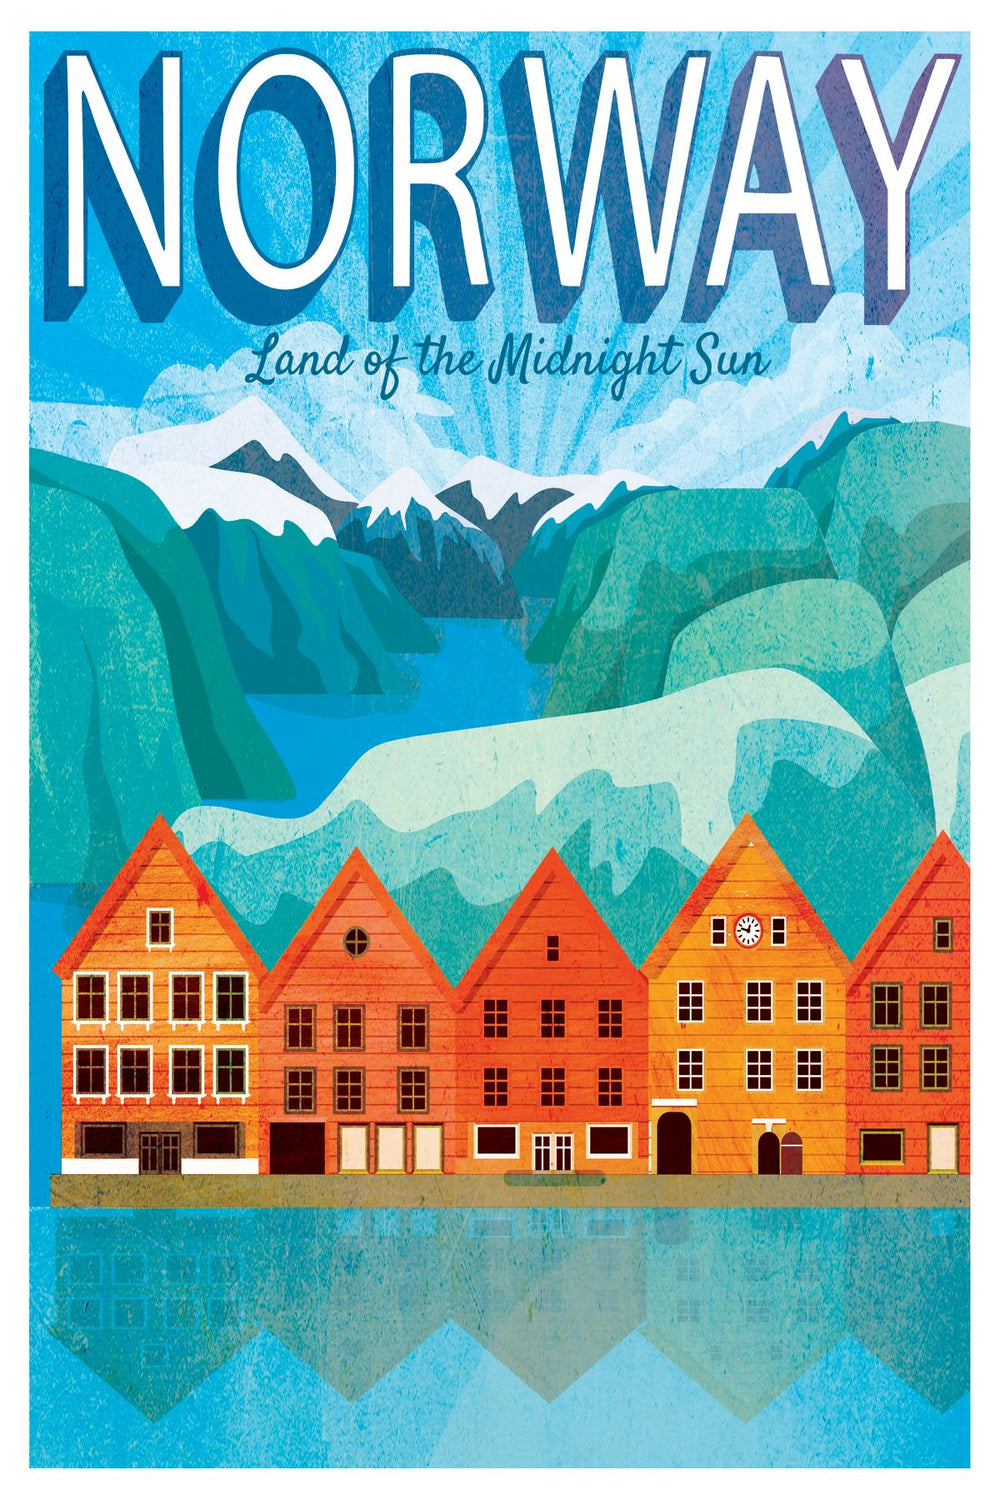 Norway Tourism Vintage Poster